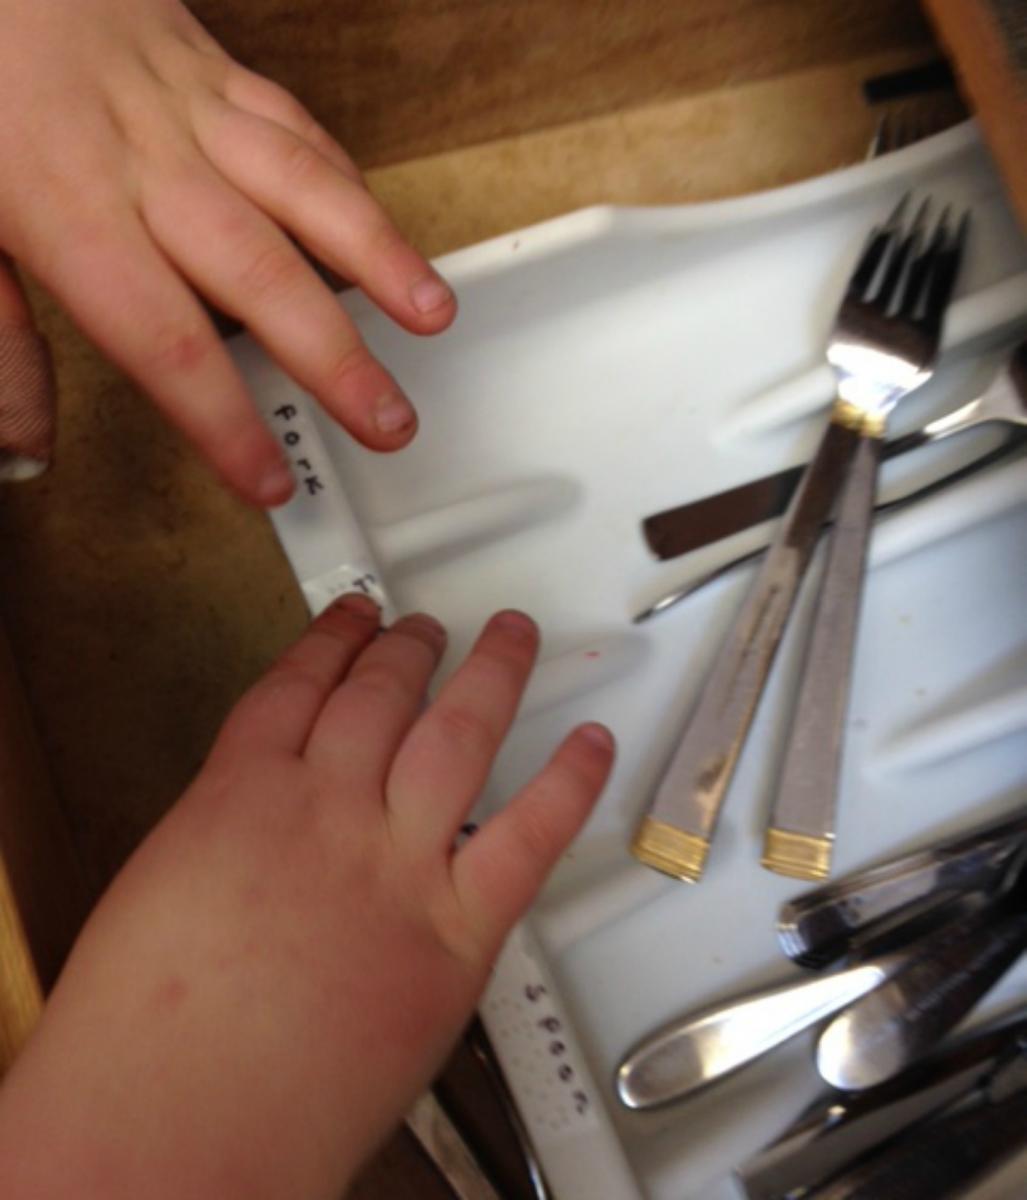 Child reading braille labels on silverware sorter